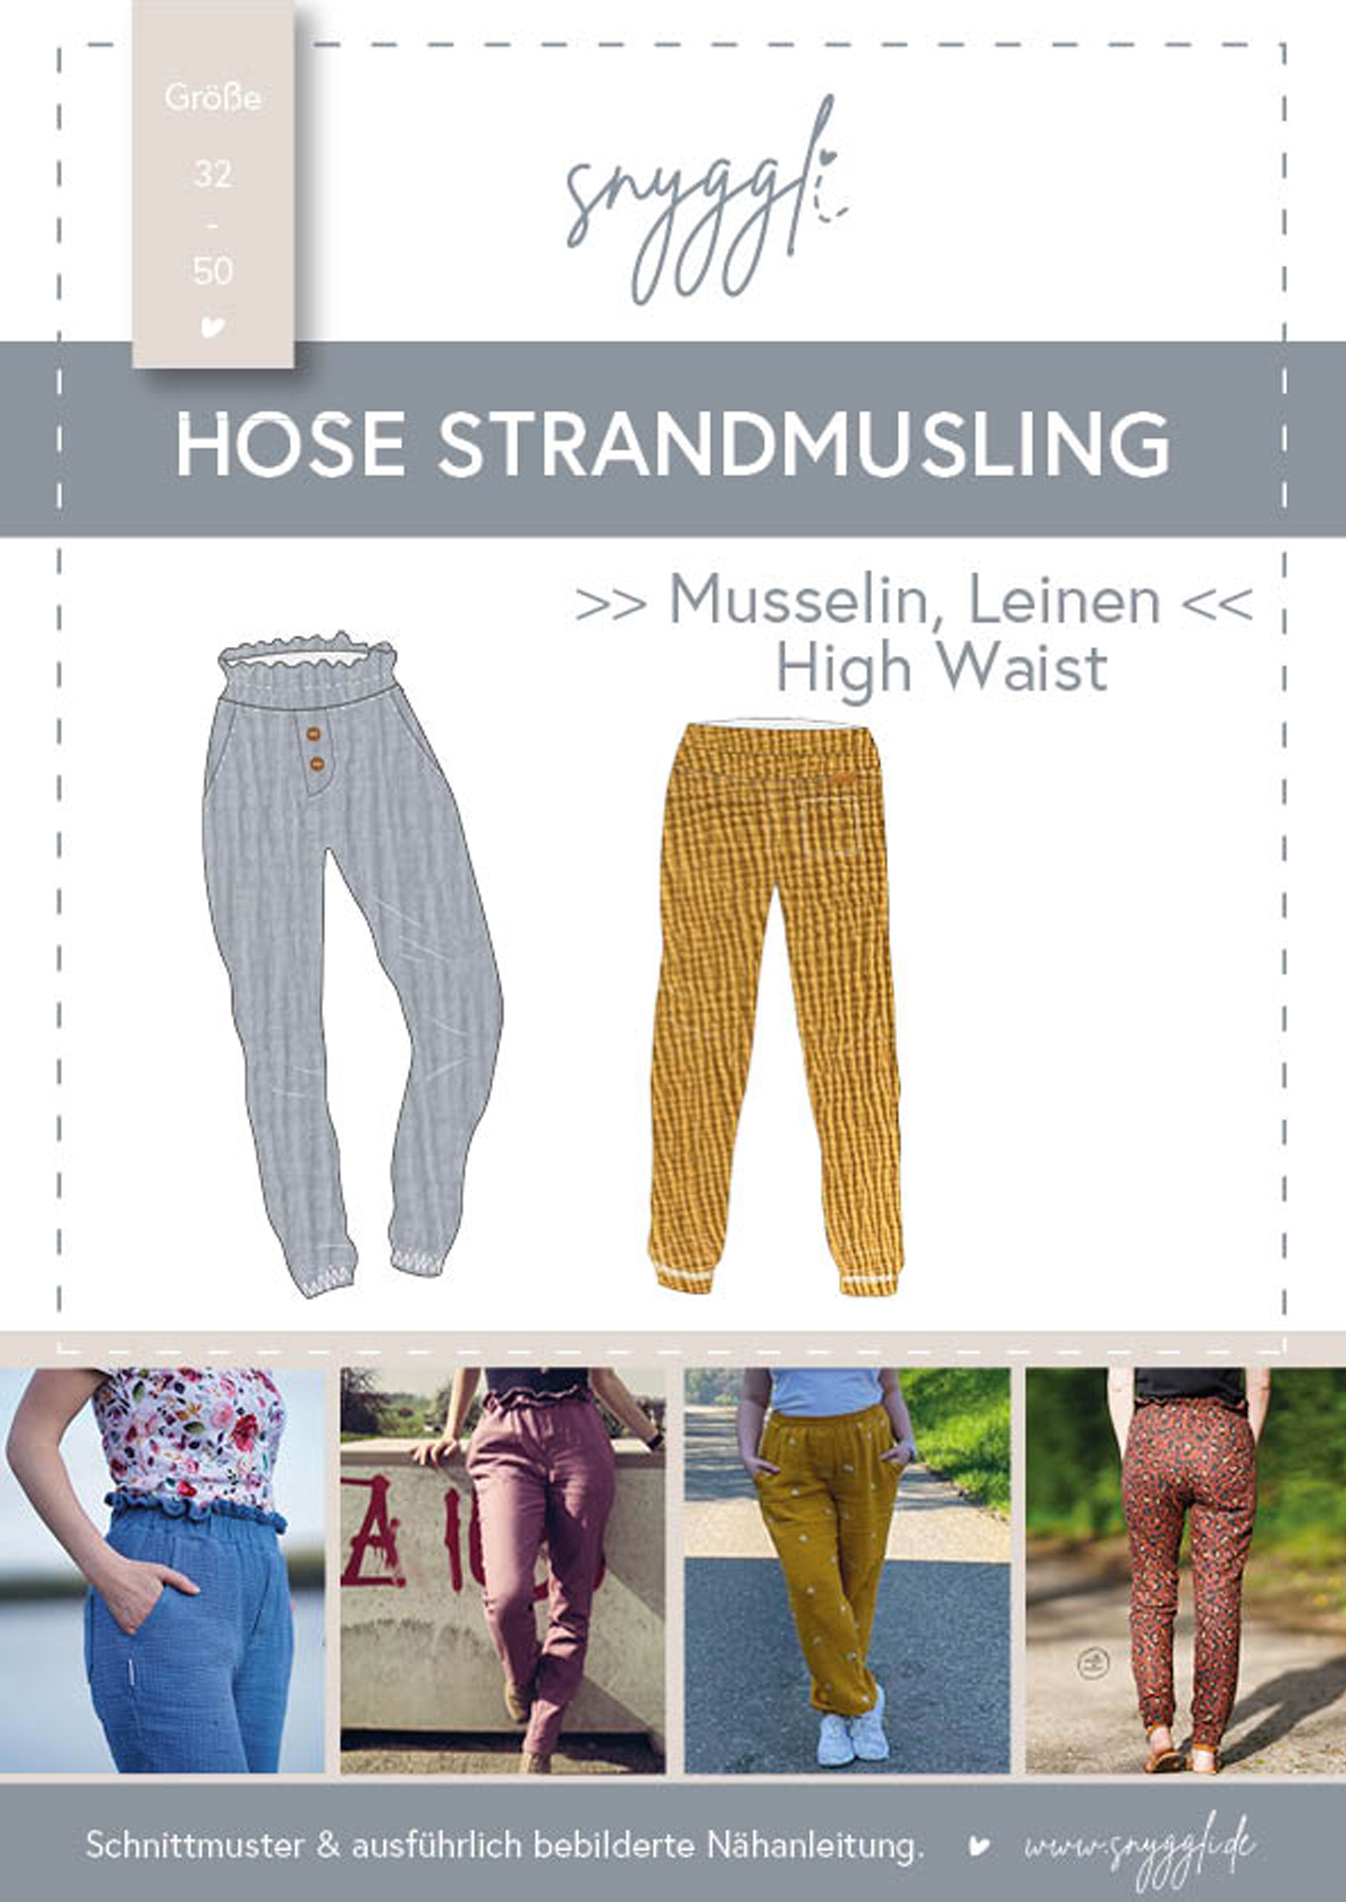 Snyggli-Musselin-Hose-Strandmusling-Schnittmuster-Leinen-Damen-high-waist--Sommer-Gr-32-50-Damen-Cover-2